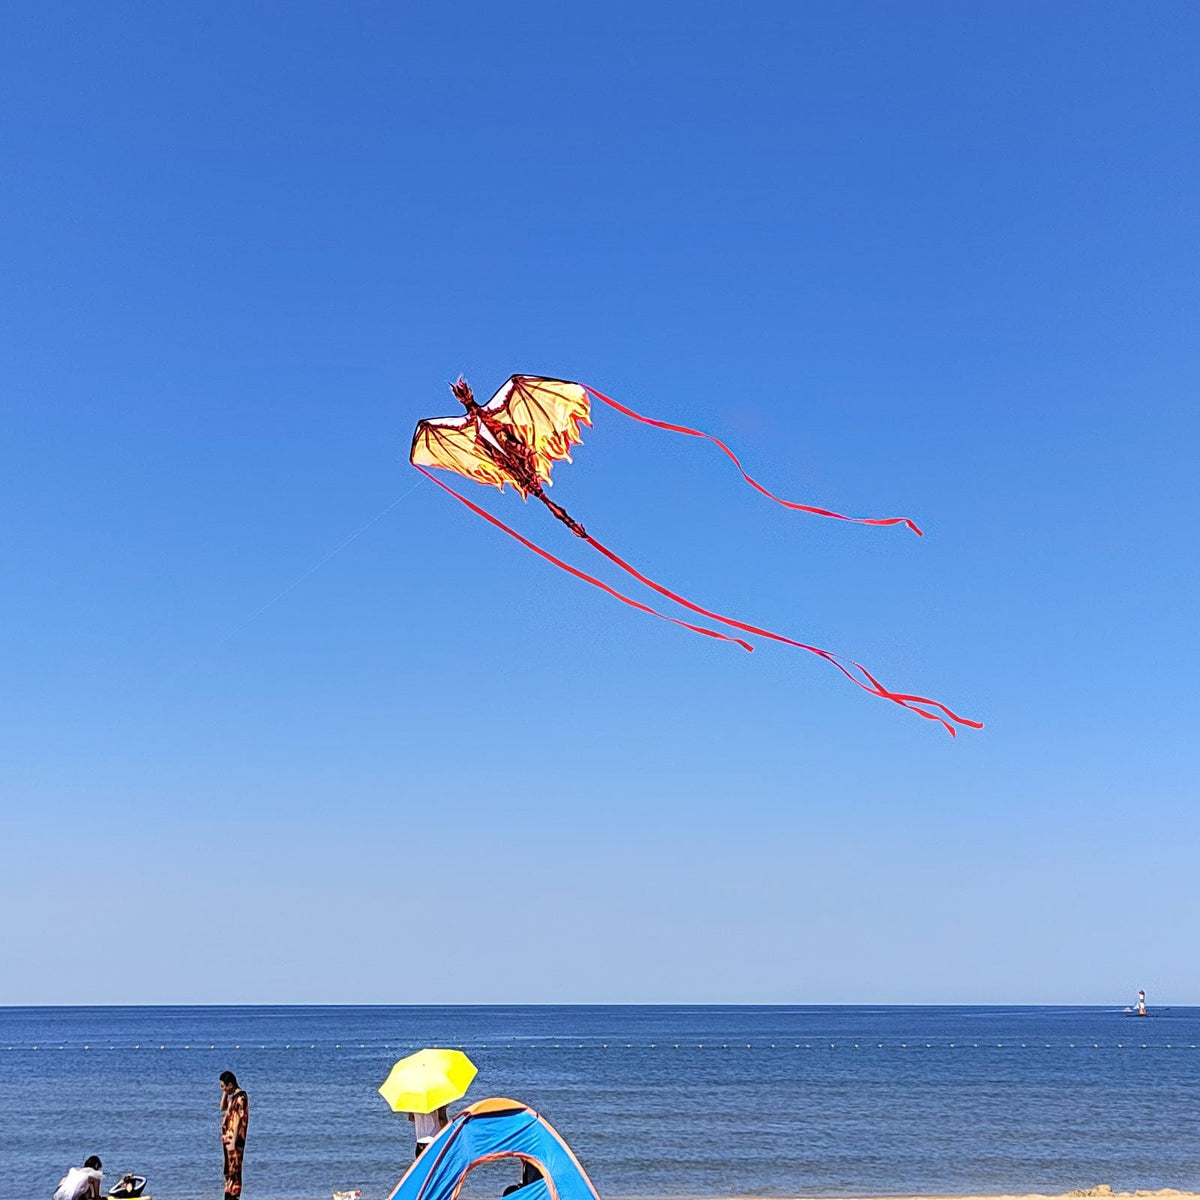 Simxkai Dragon Kite for Kids & Adults (Fire)